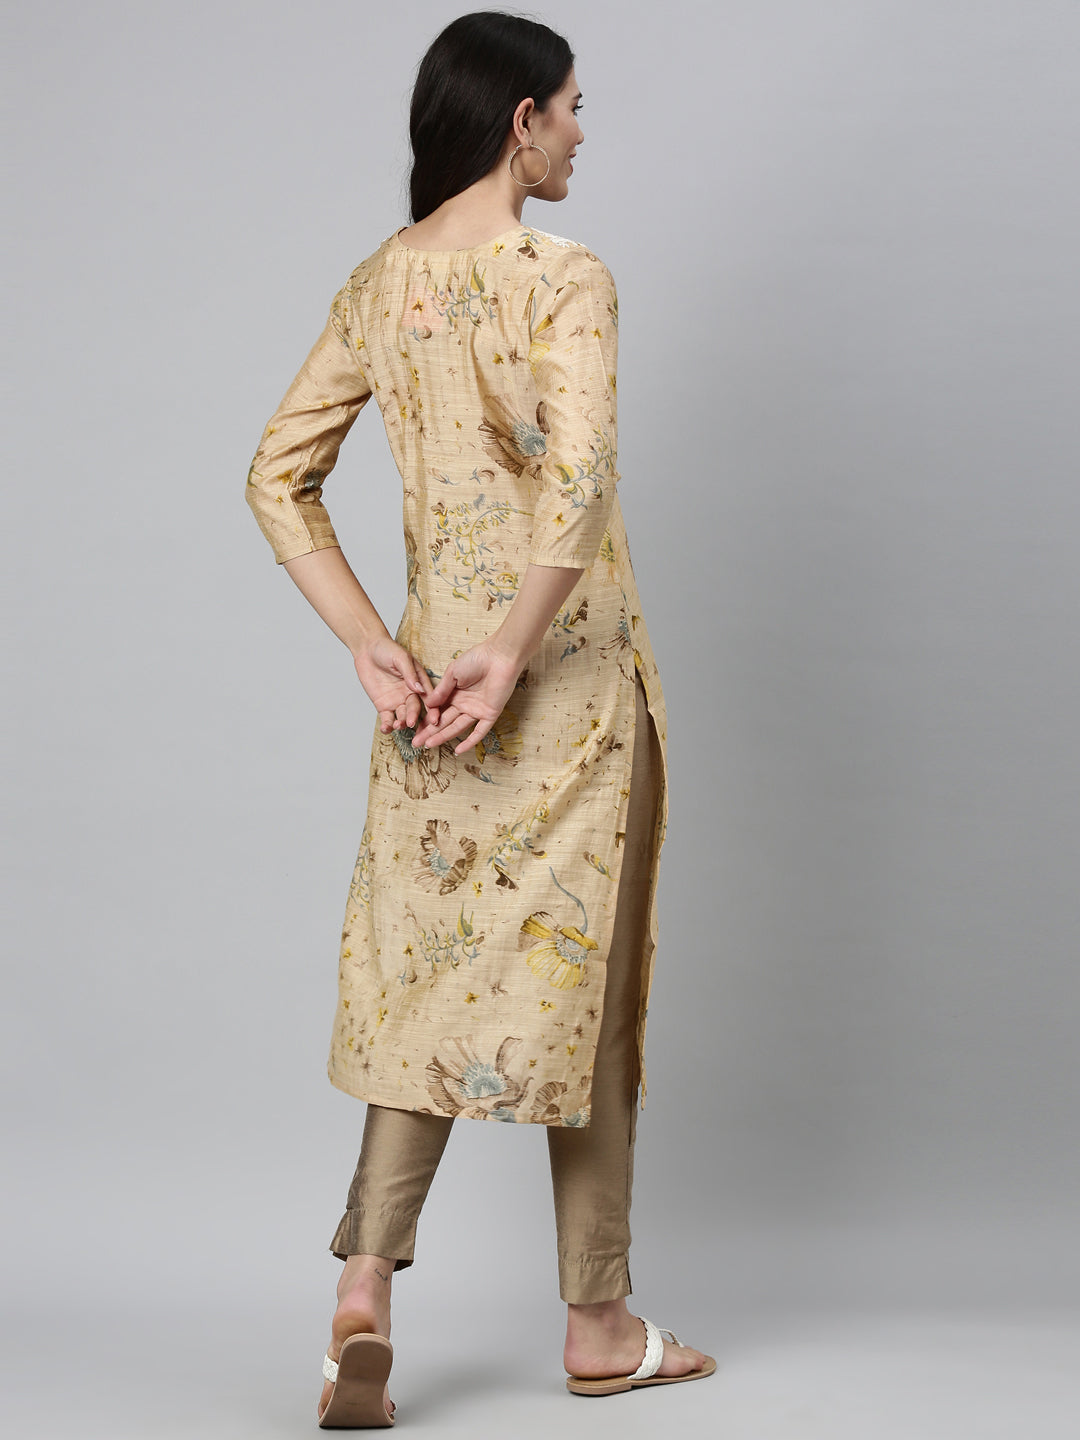 Neeru's Beige Color Silk Fabric Kurta